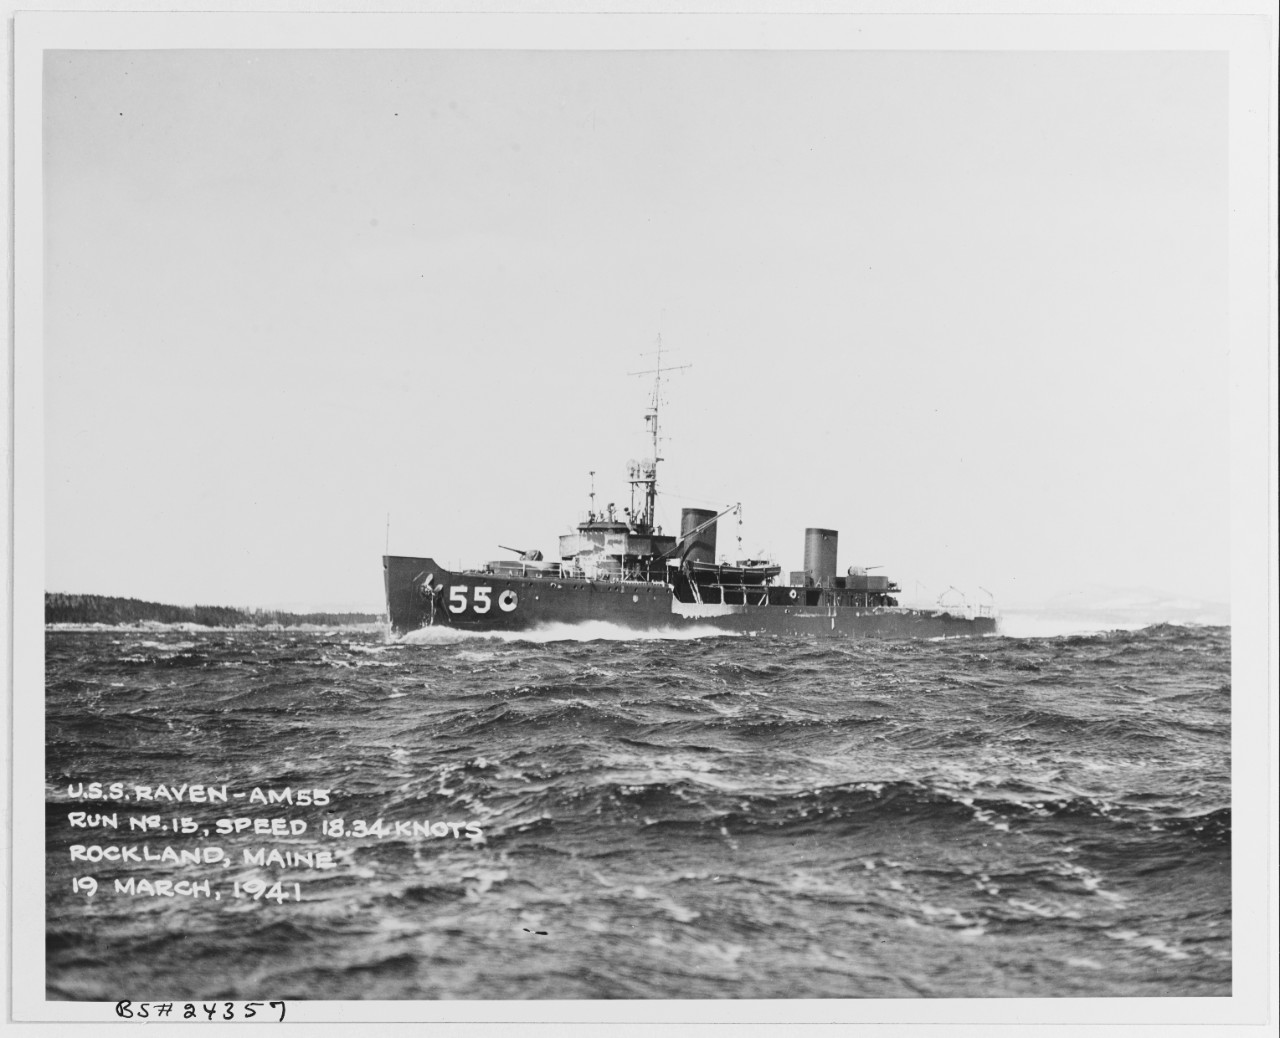 USS RAVEN (AM-55)